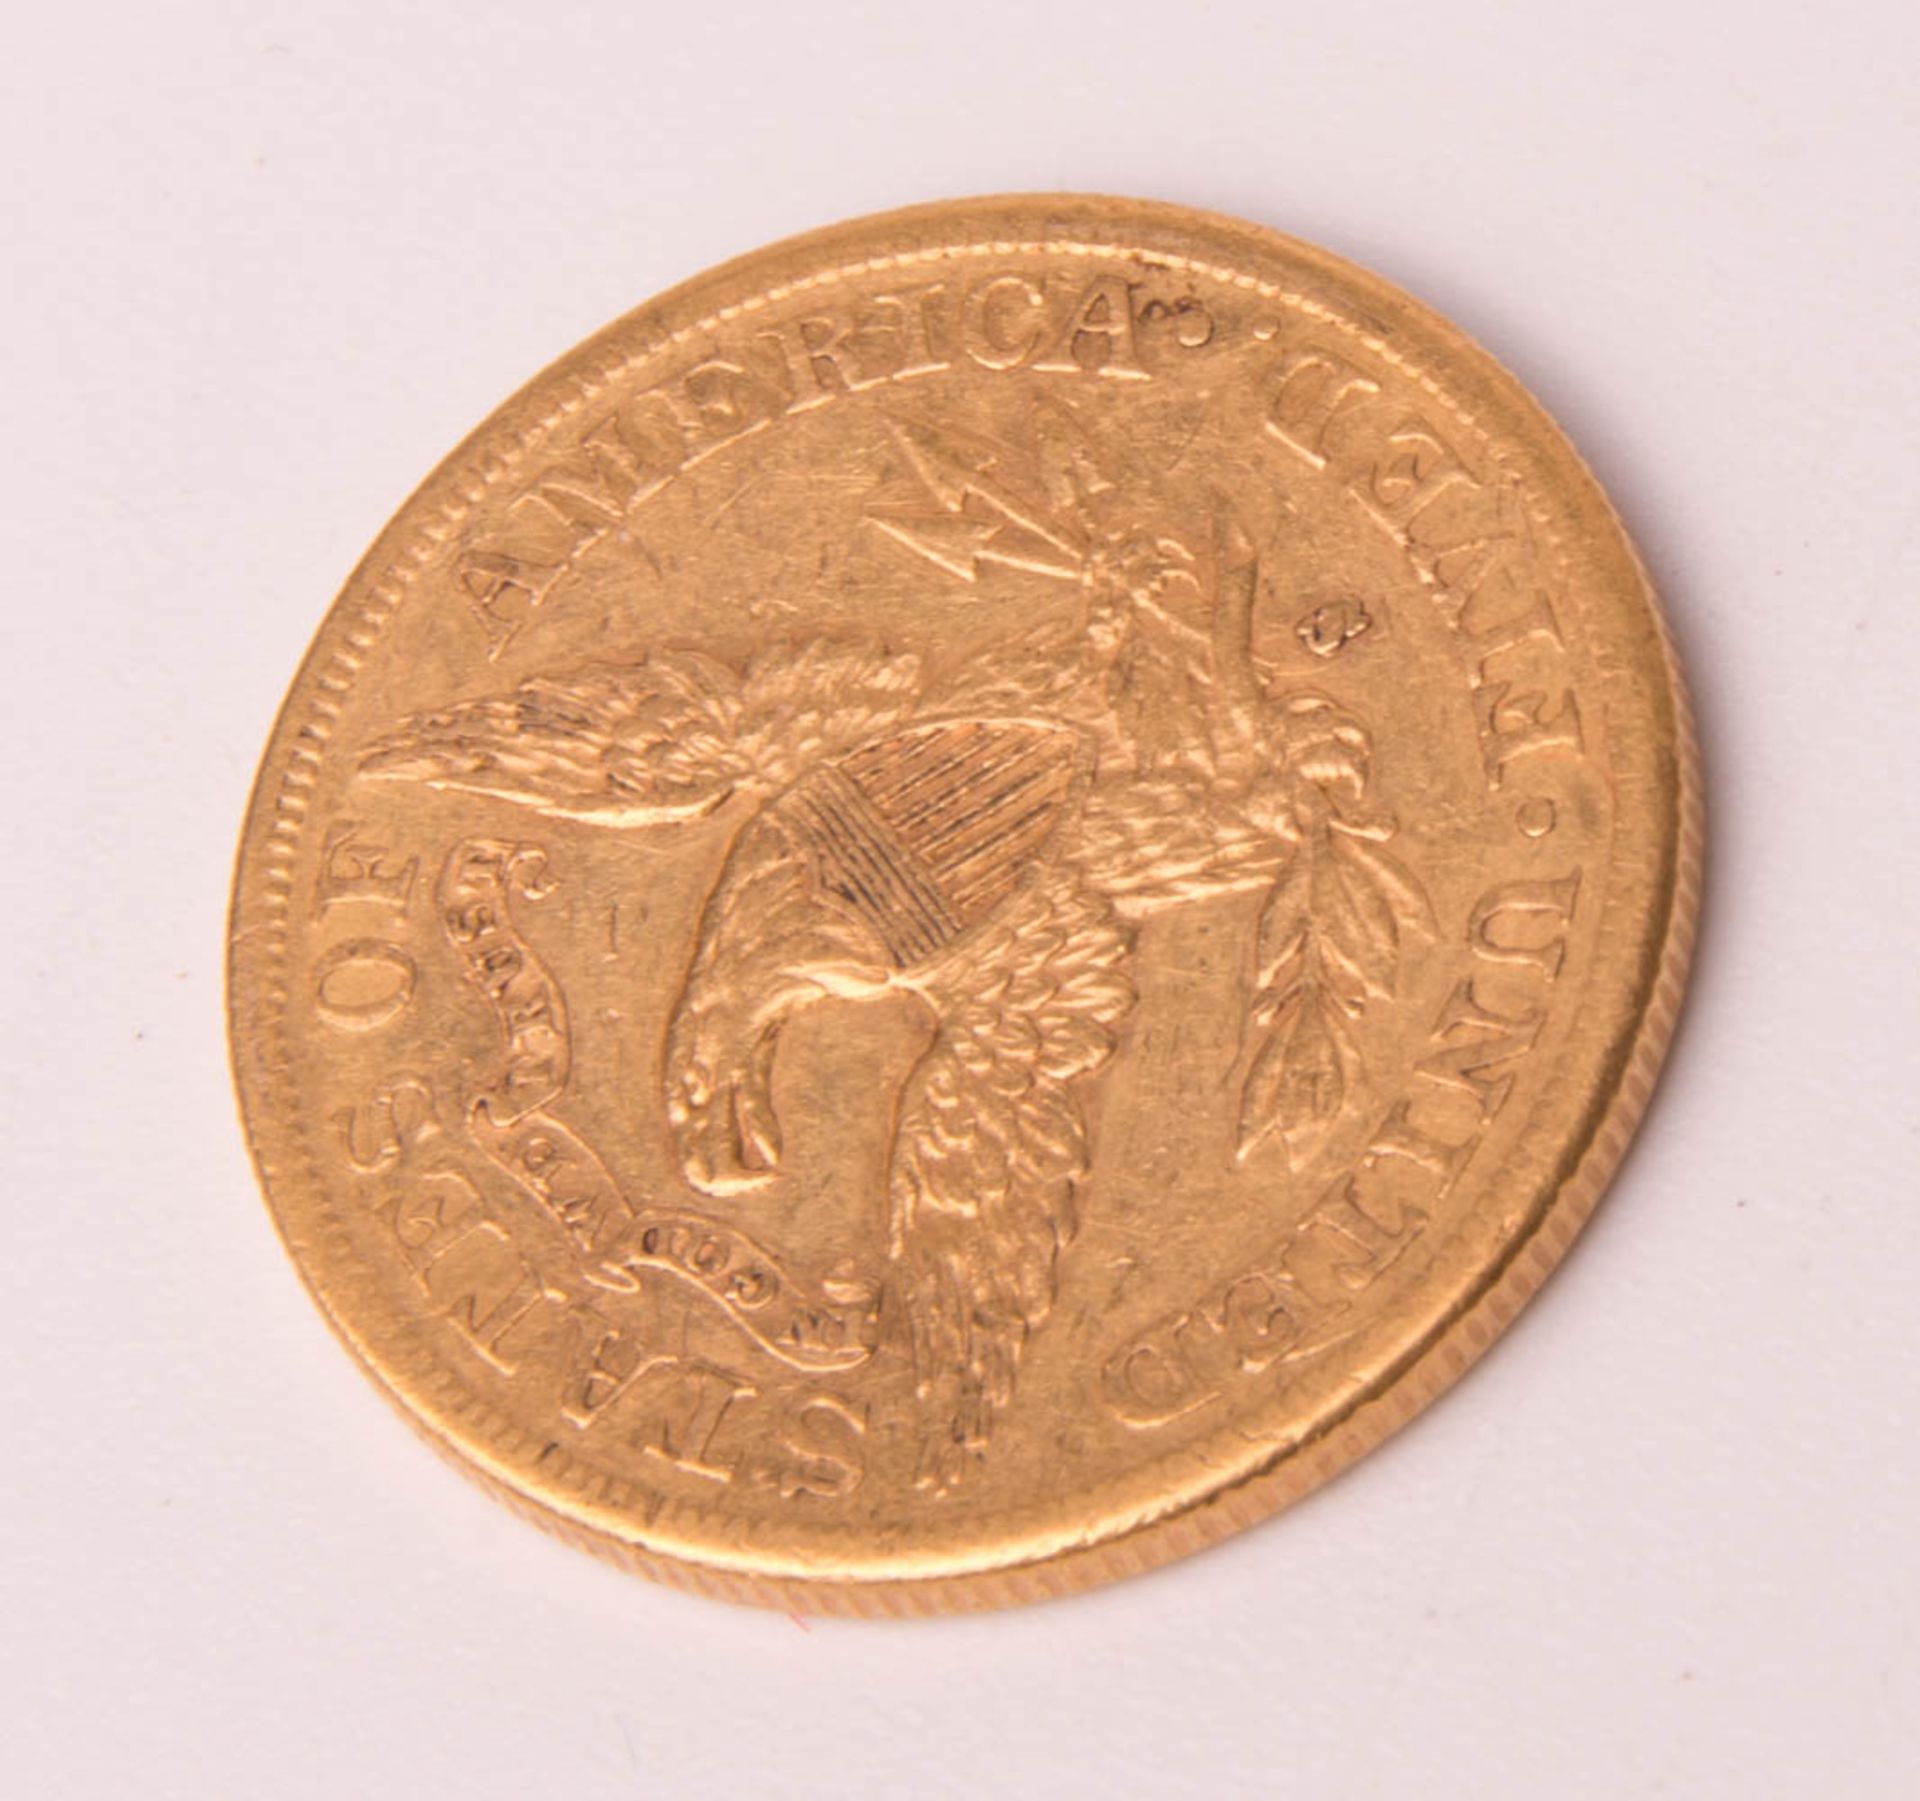 Goldmünze, US Five Dollar 1887, Liberty Head EF Uncertified. - Bild 2 aus 3